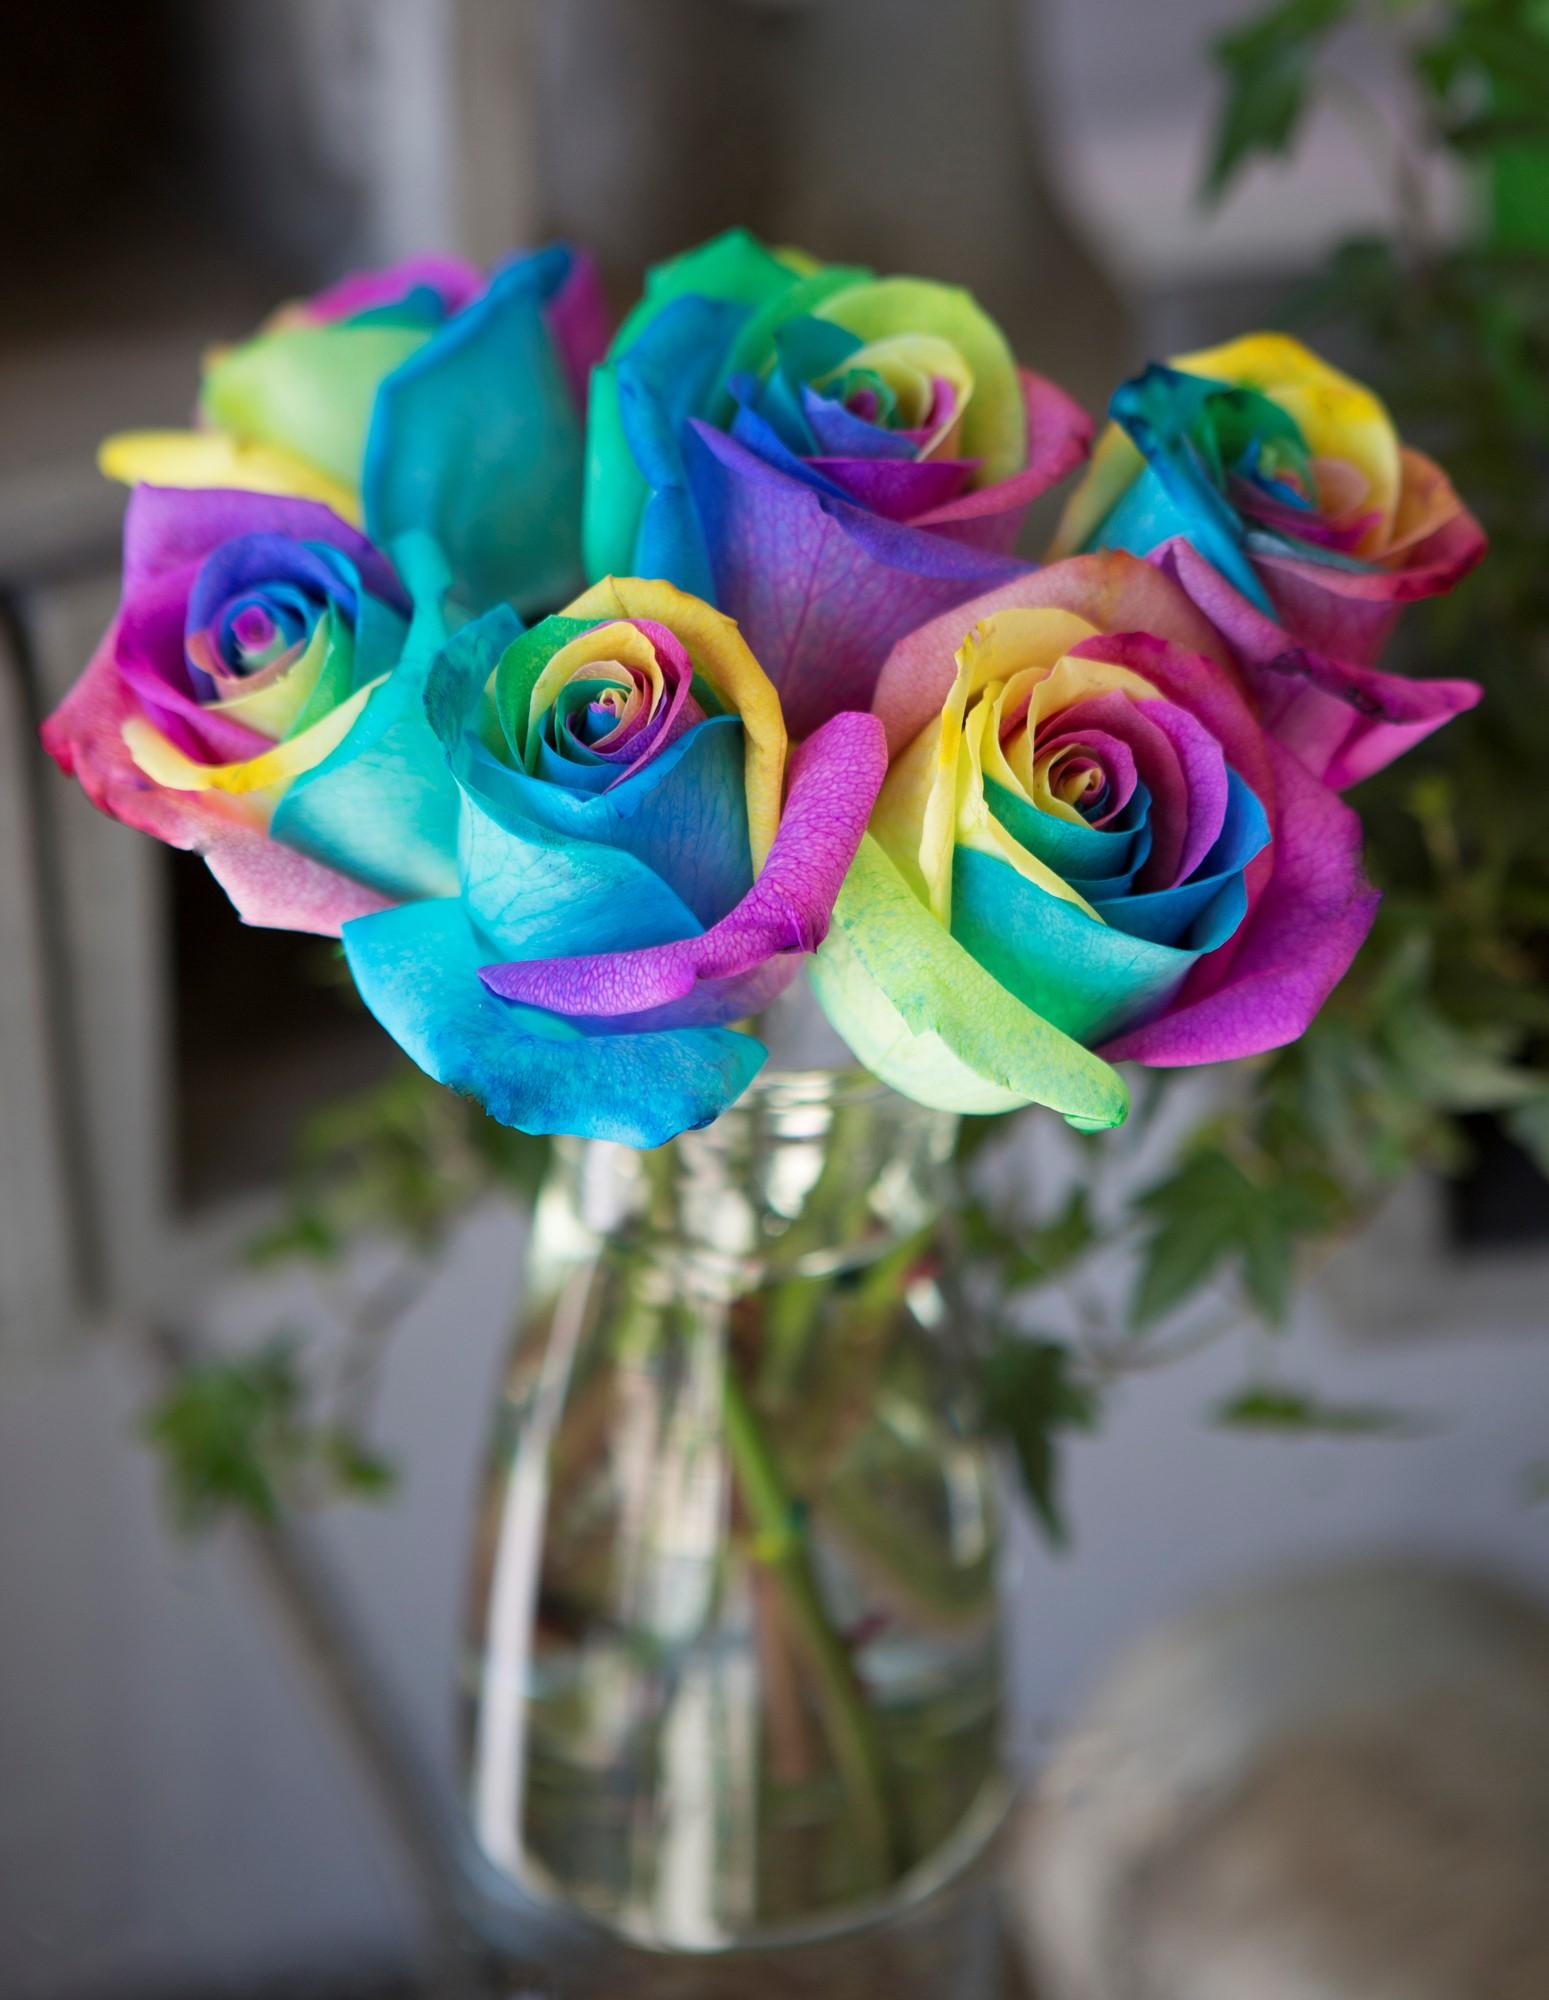 Amazon.com : KaBloom Bouquet of Fresh Cut Rainbow Roses: 6 Rainbow ...